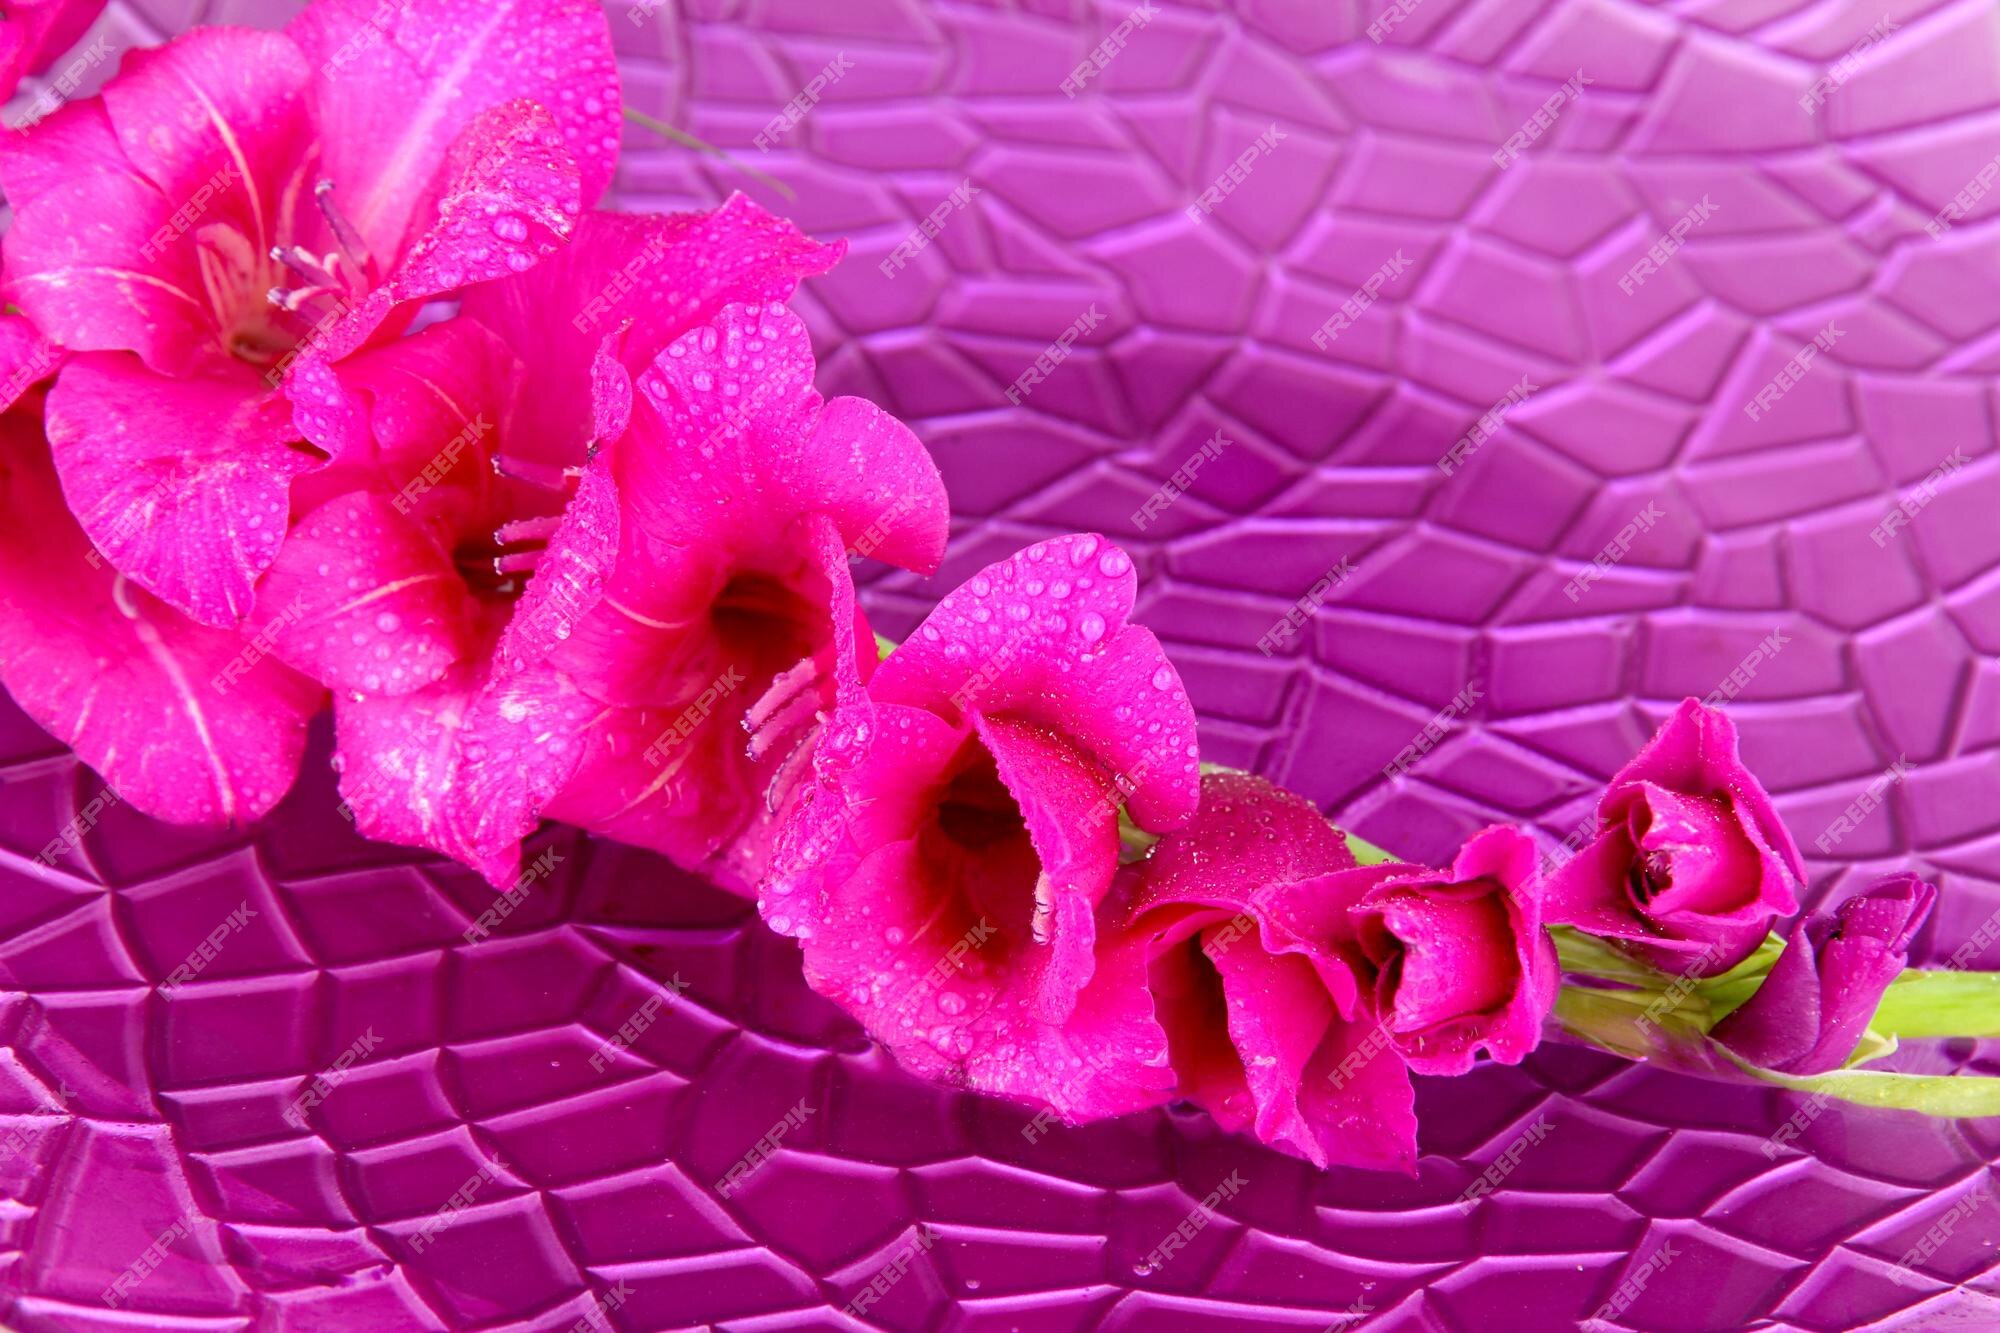 Hot Pink Flowers Images - Free Download on Freepik